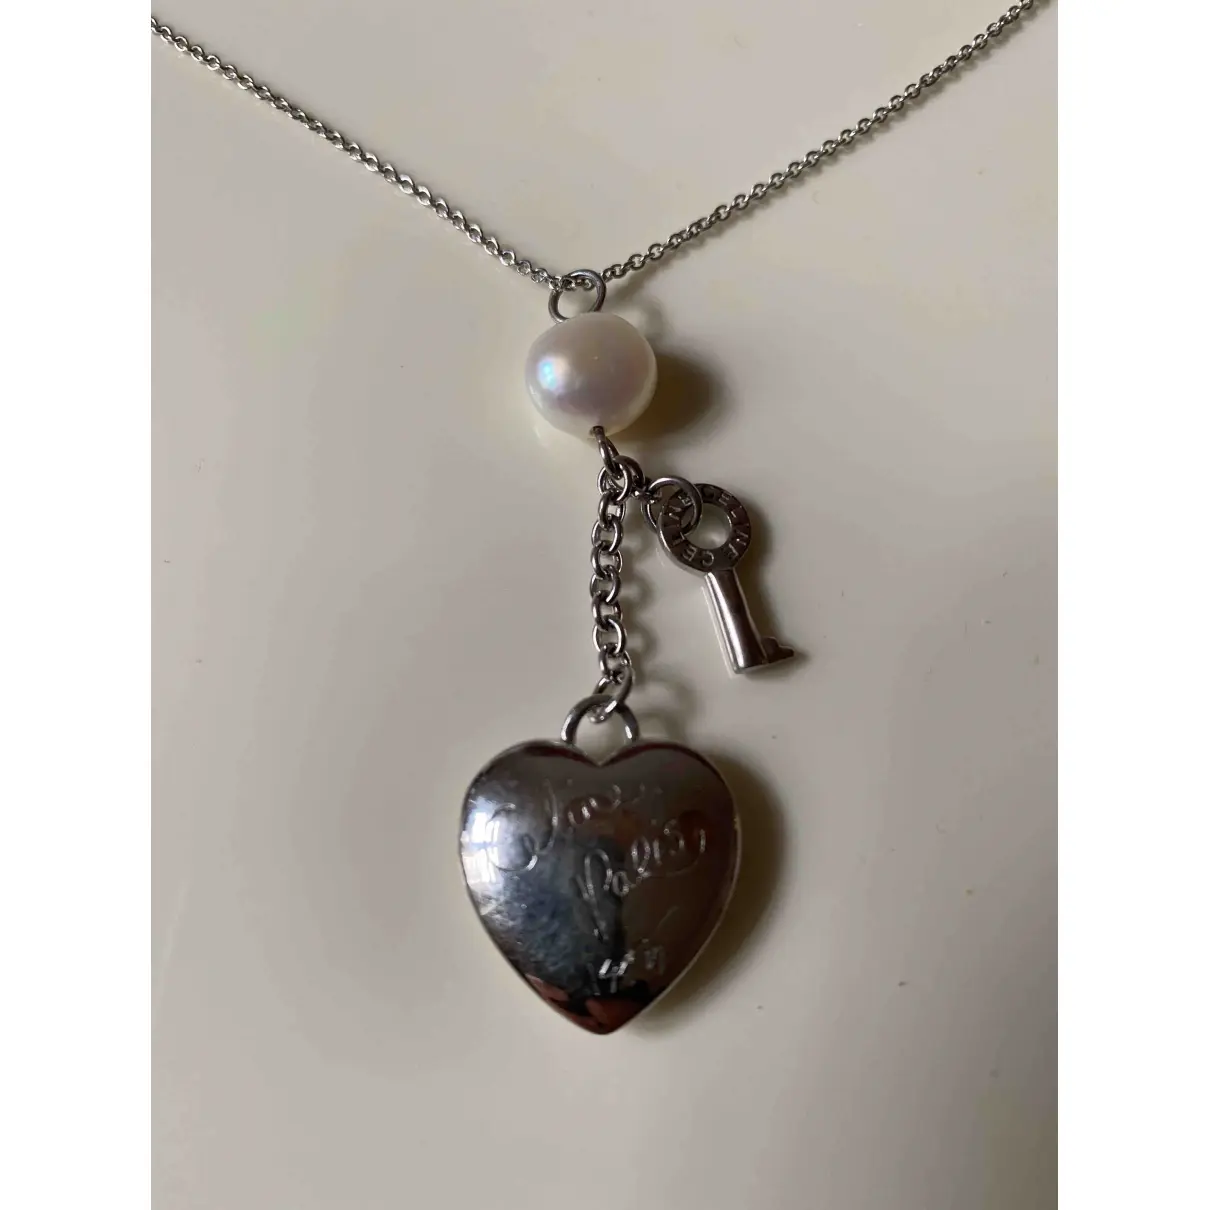 Buy Celine Silver necklace online